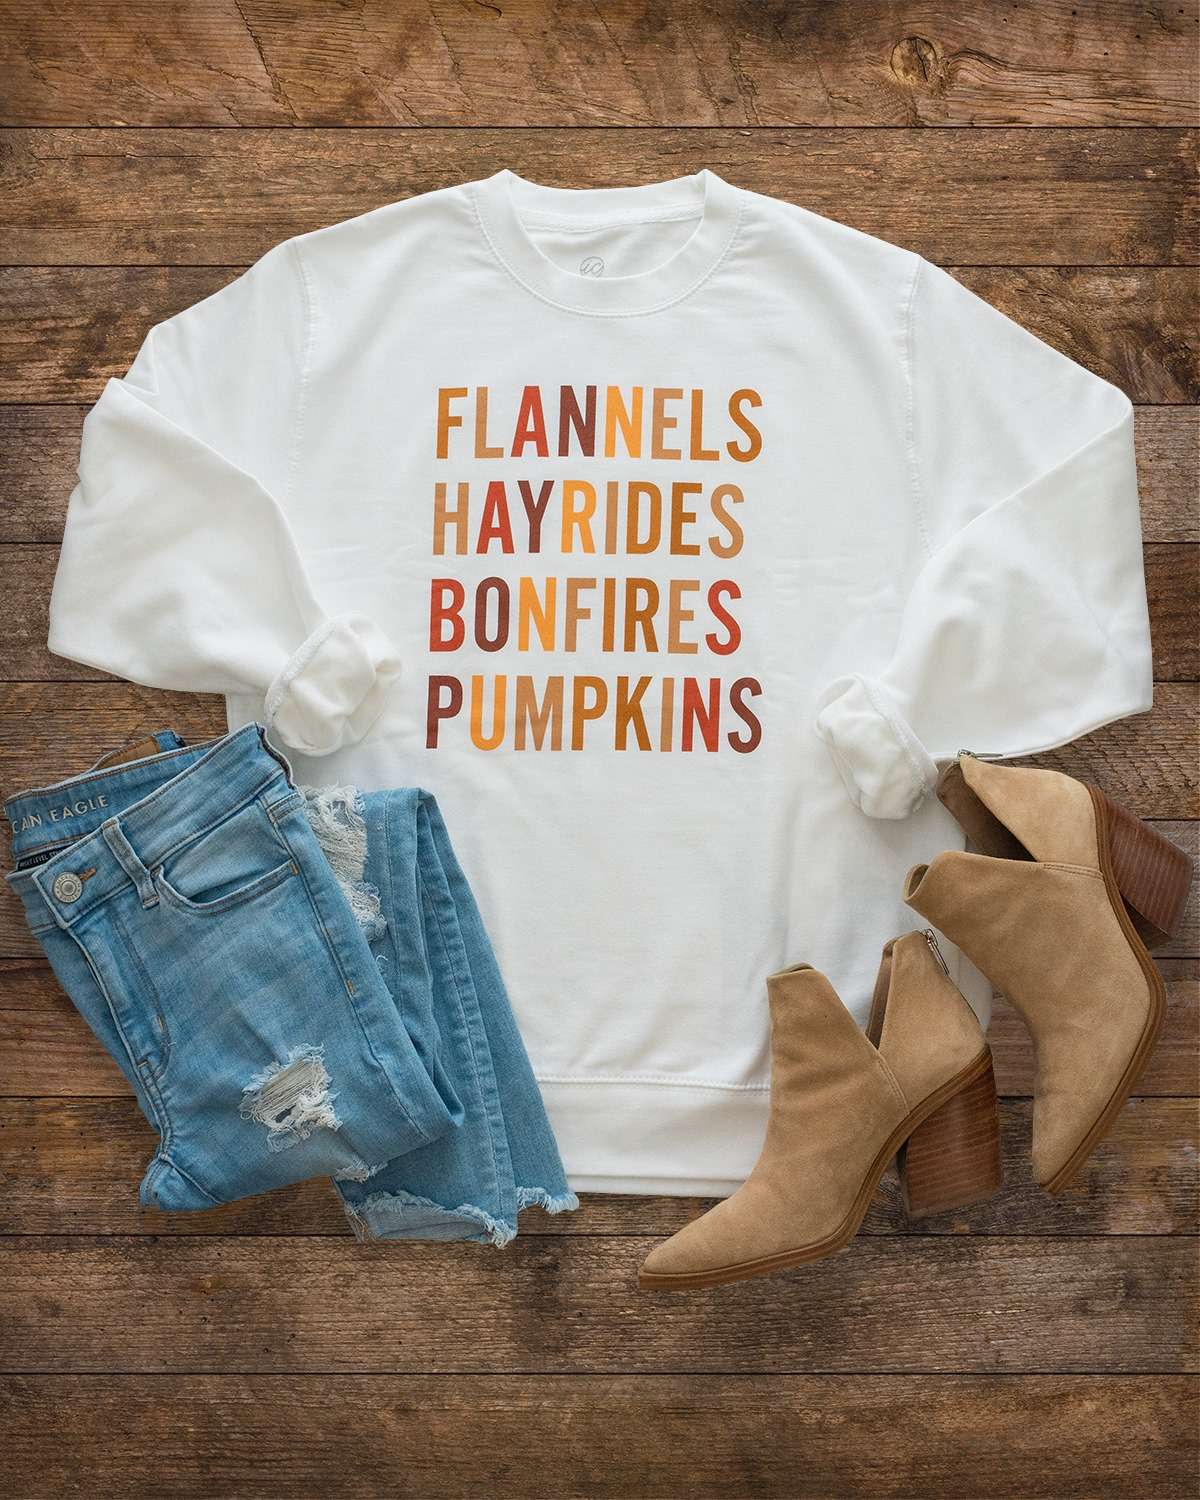 Flannels hayrides bonfires pumpkins